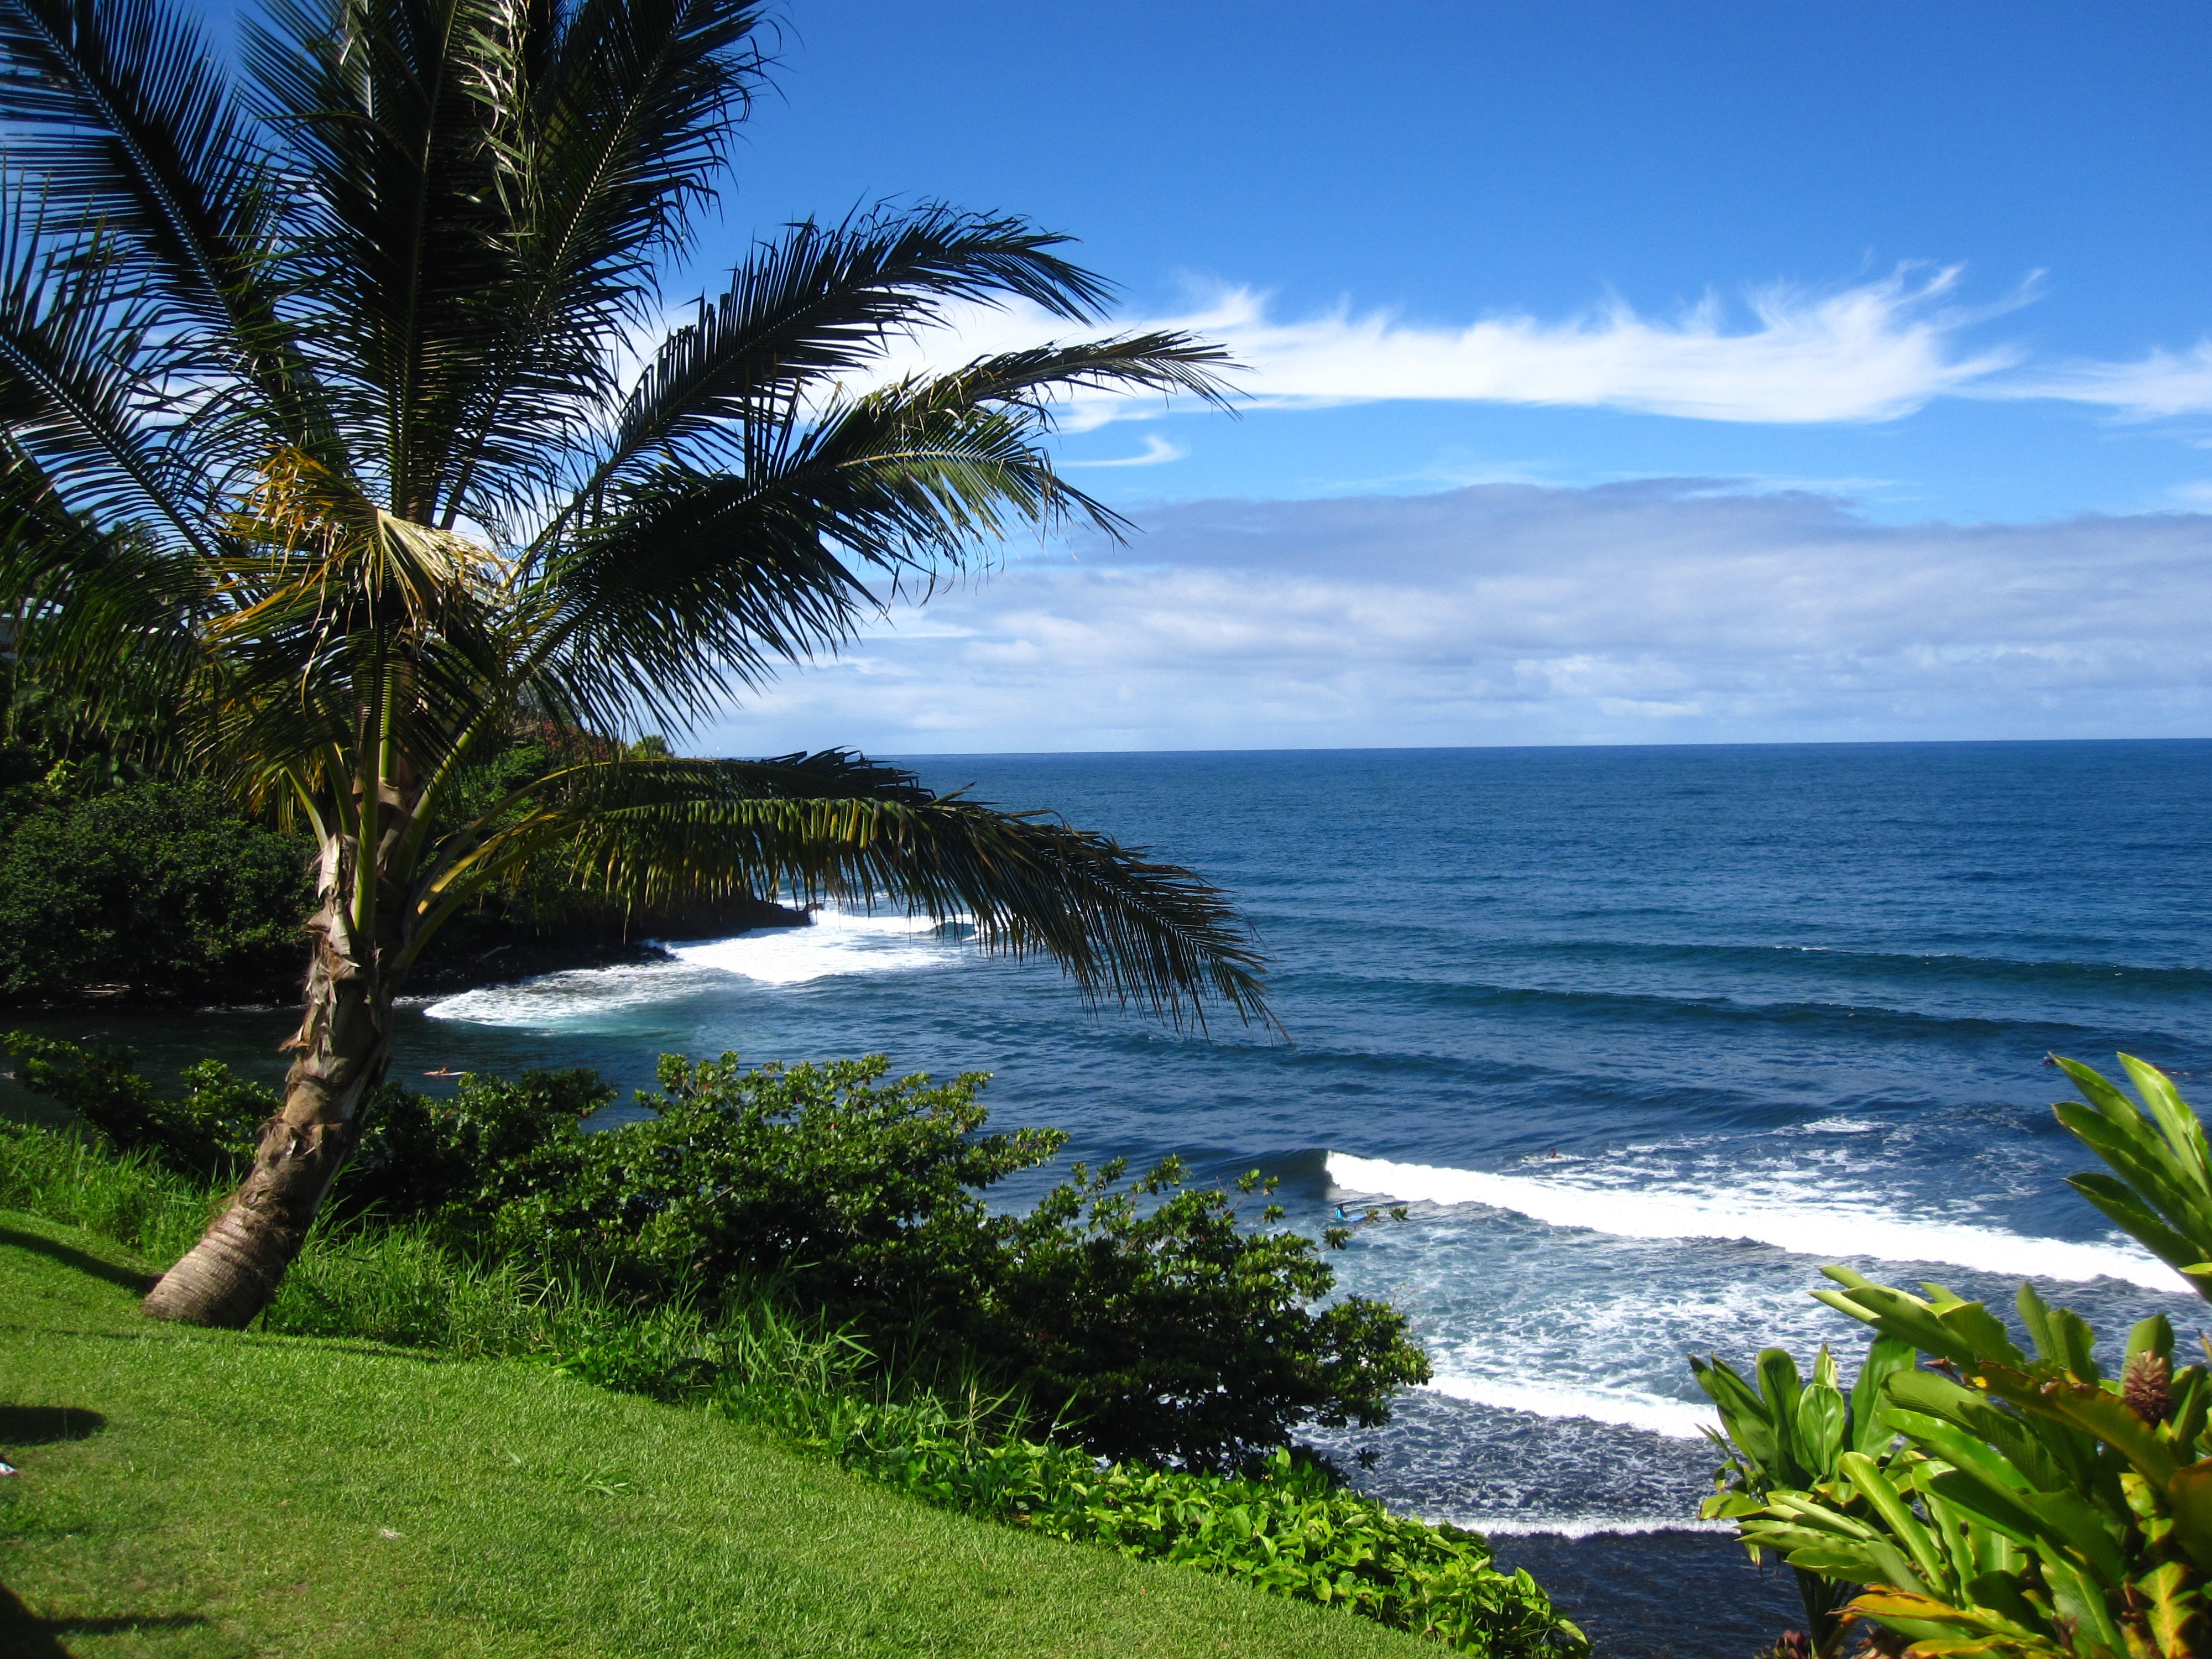 9 Breathtaking 360-Degree Views Of Hawaii, Thanks To Google’s Trekker